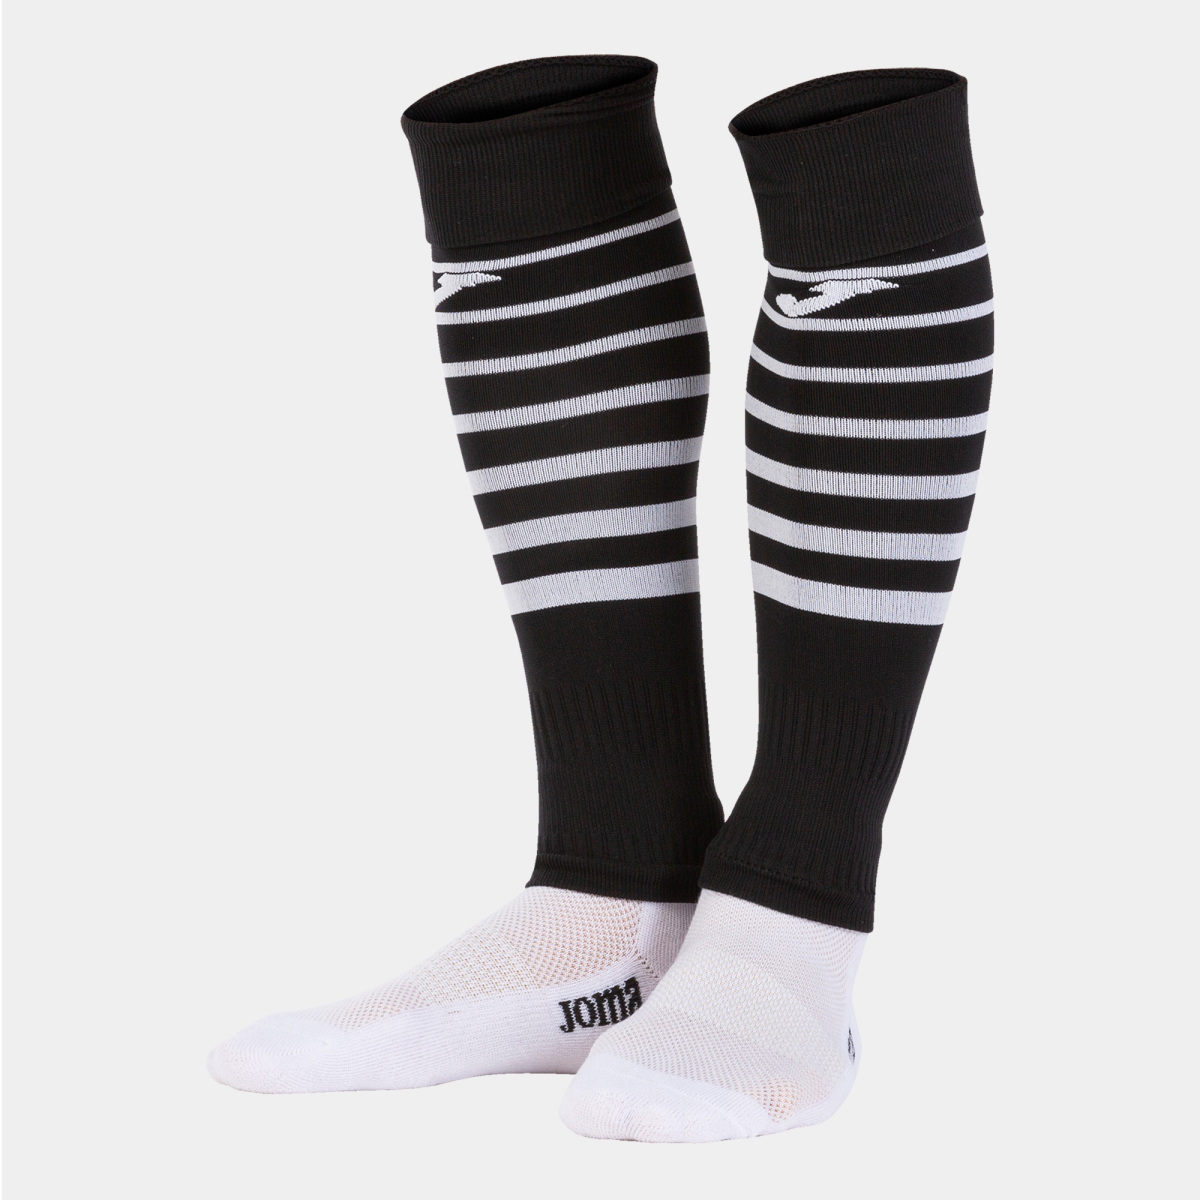 Pair Our Grip Socks PremSox Football Sock Sleeves Team Leg Sock Sleeve Fits Over Shin Pad 